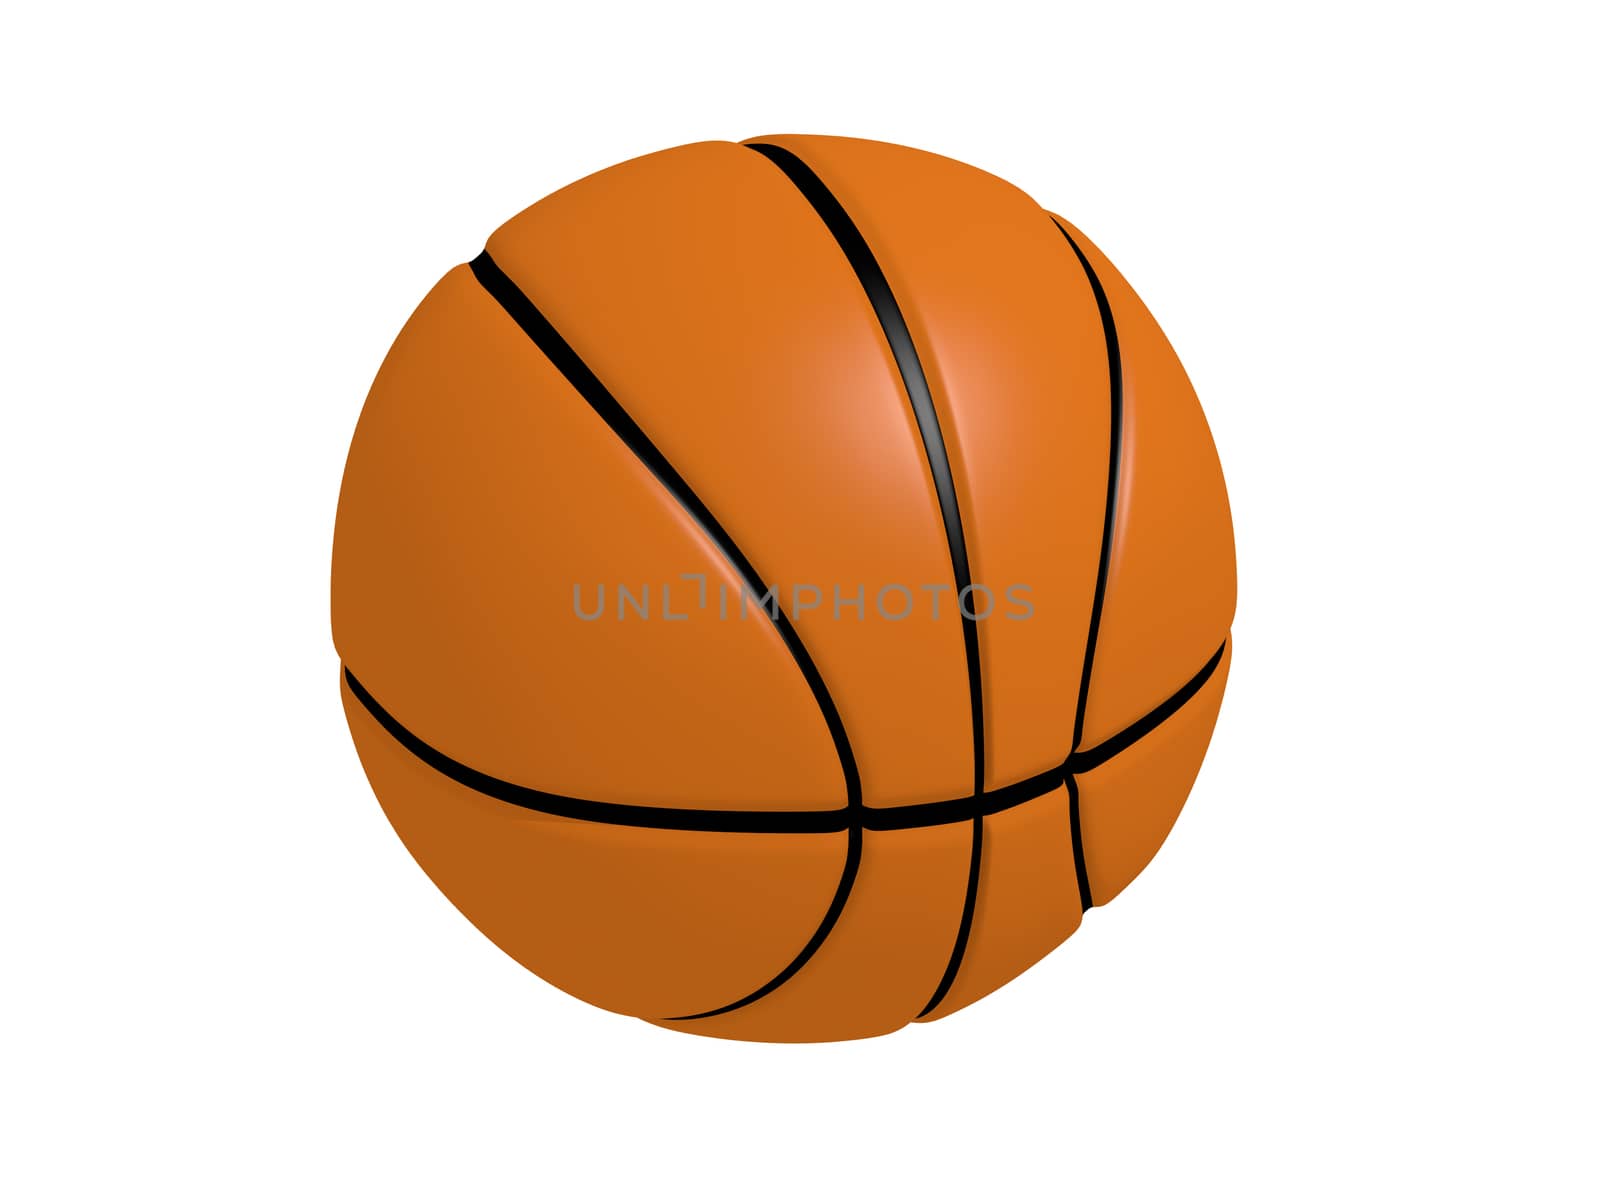 3d render illustration of Basketball by HD_premium_shots